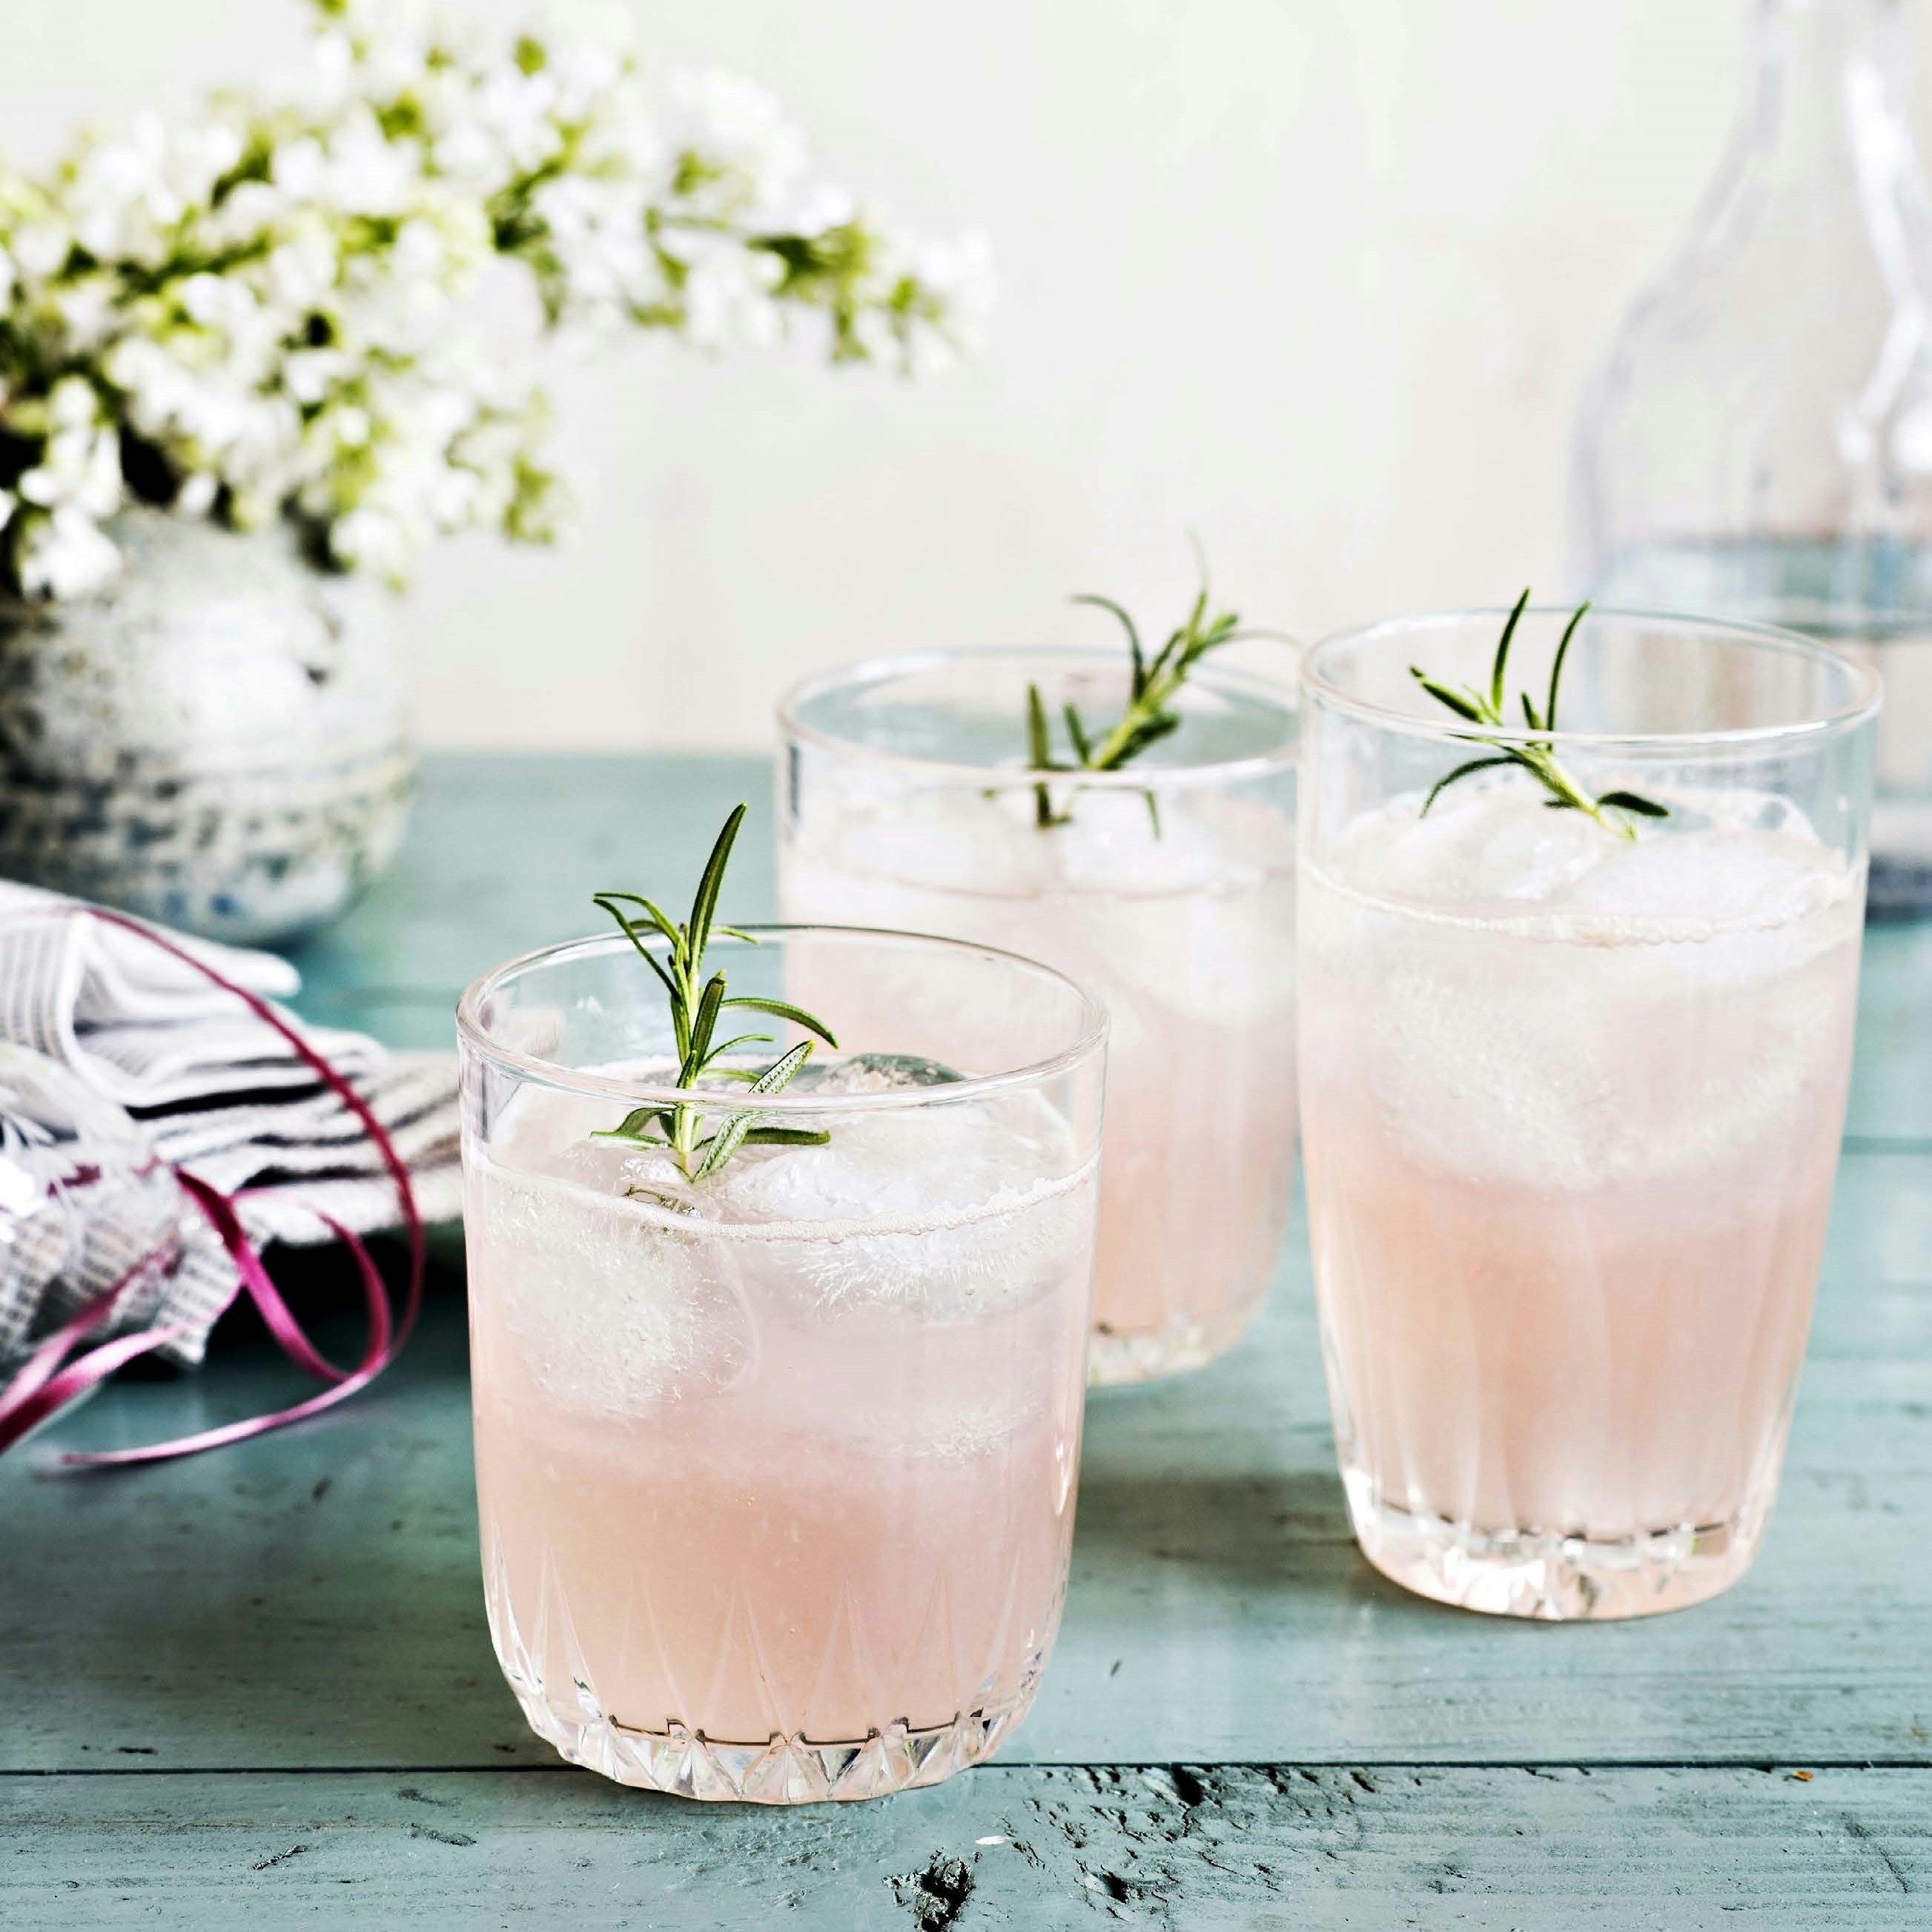 Perfekt fredagsdrink - pink gin med rosmarin